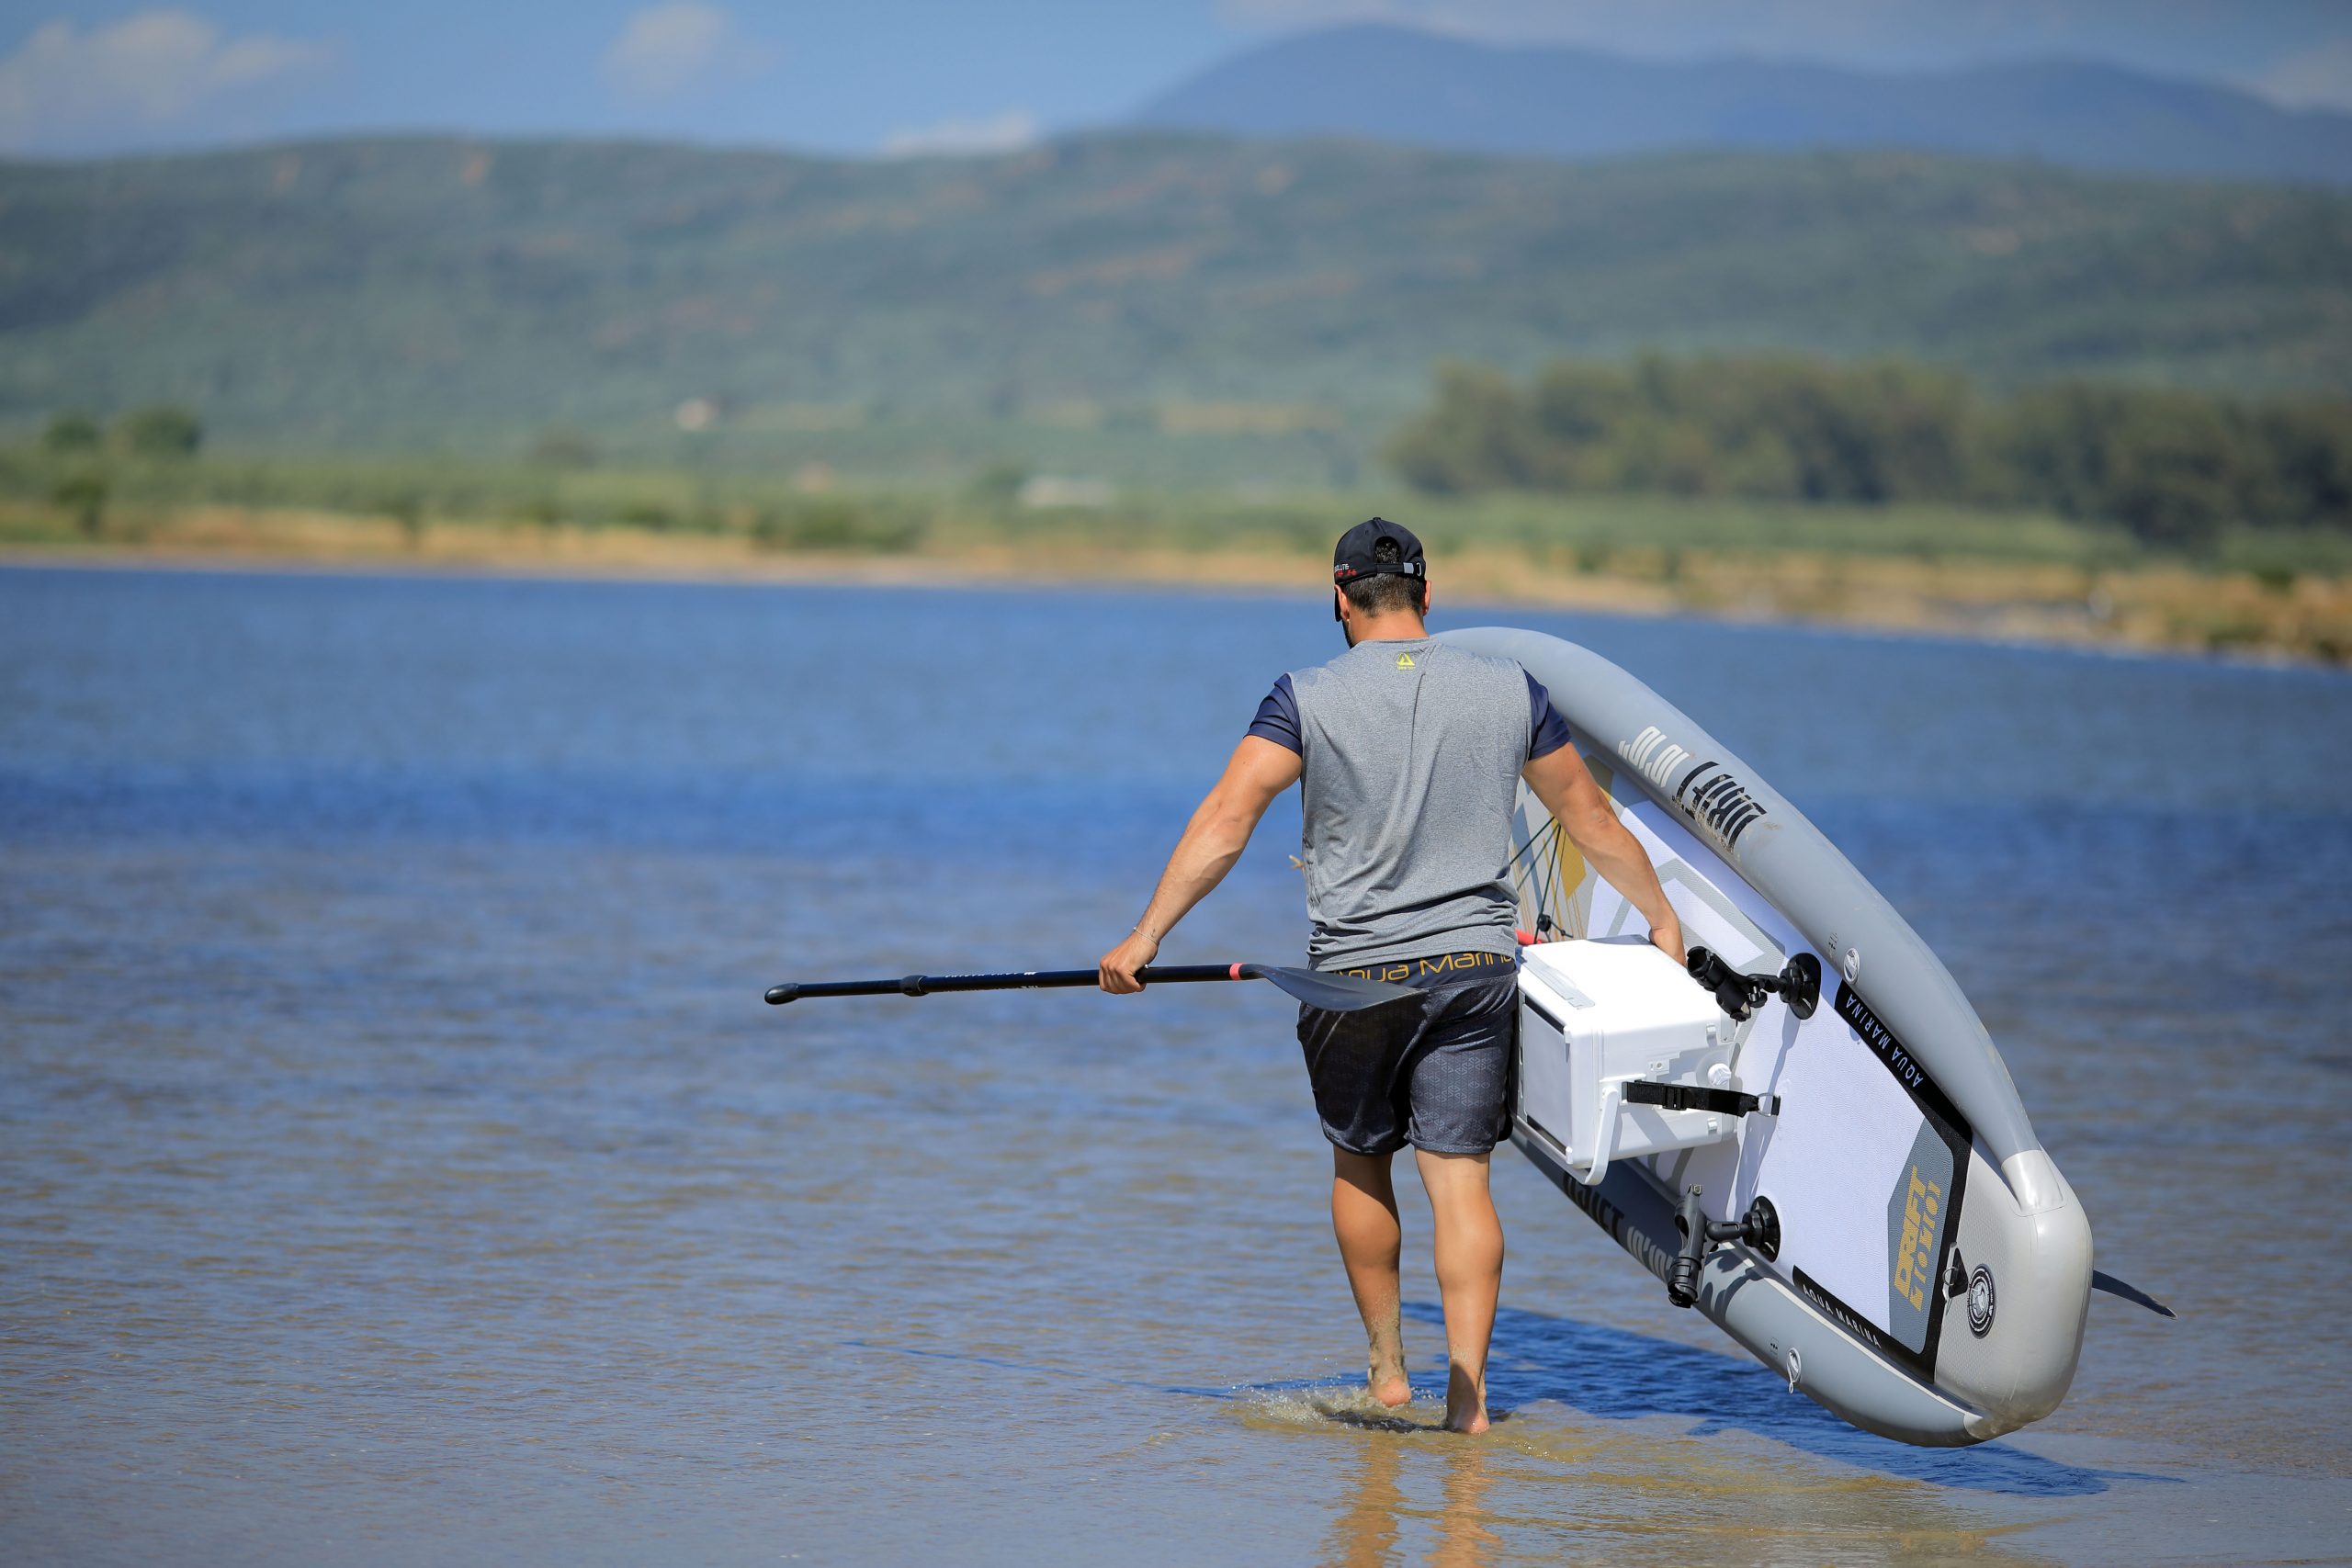 AQUA MARINA 330*97*15cm DRIFT inflatable sup board stand up paddle